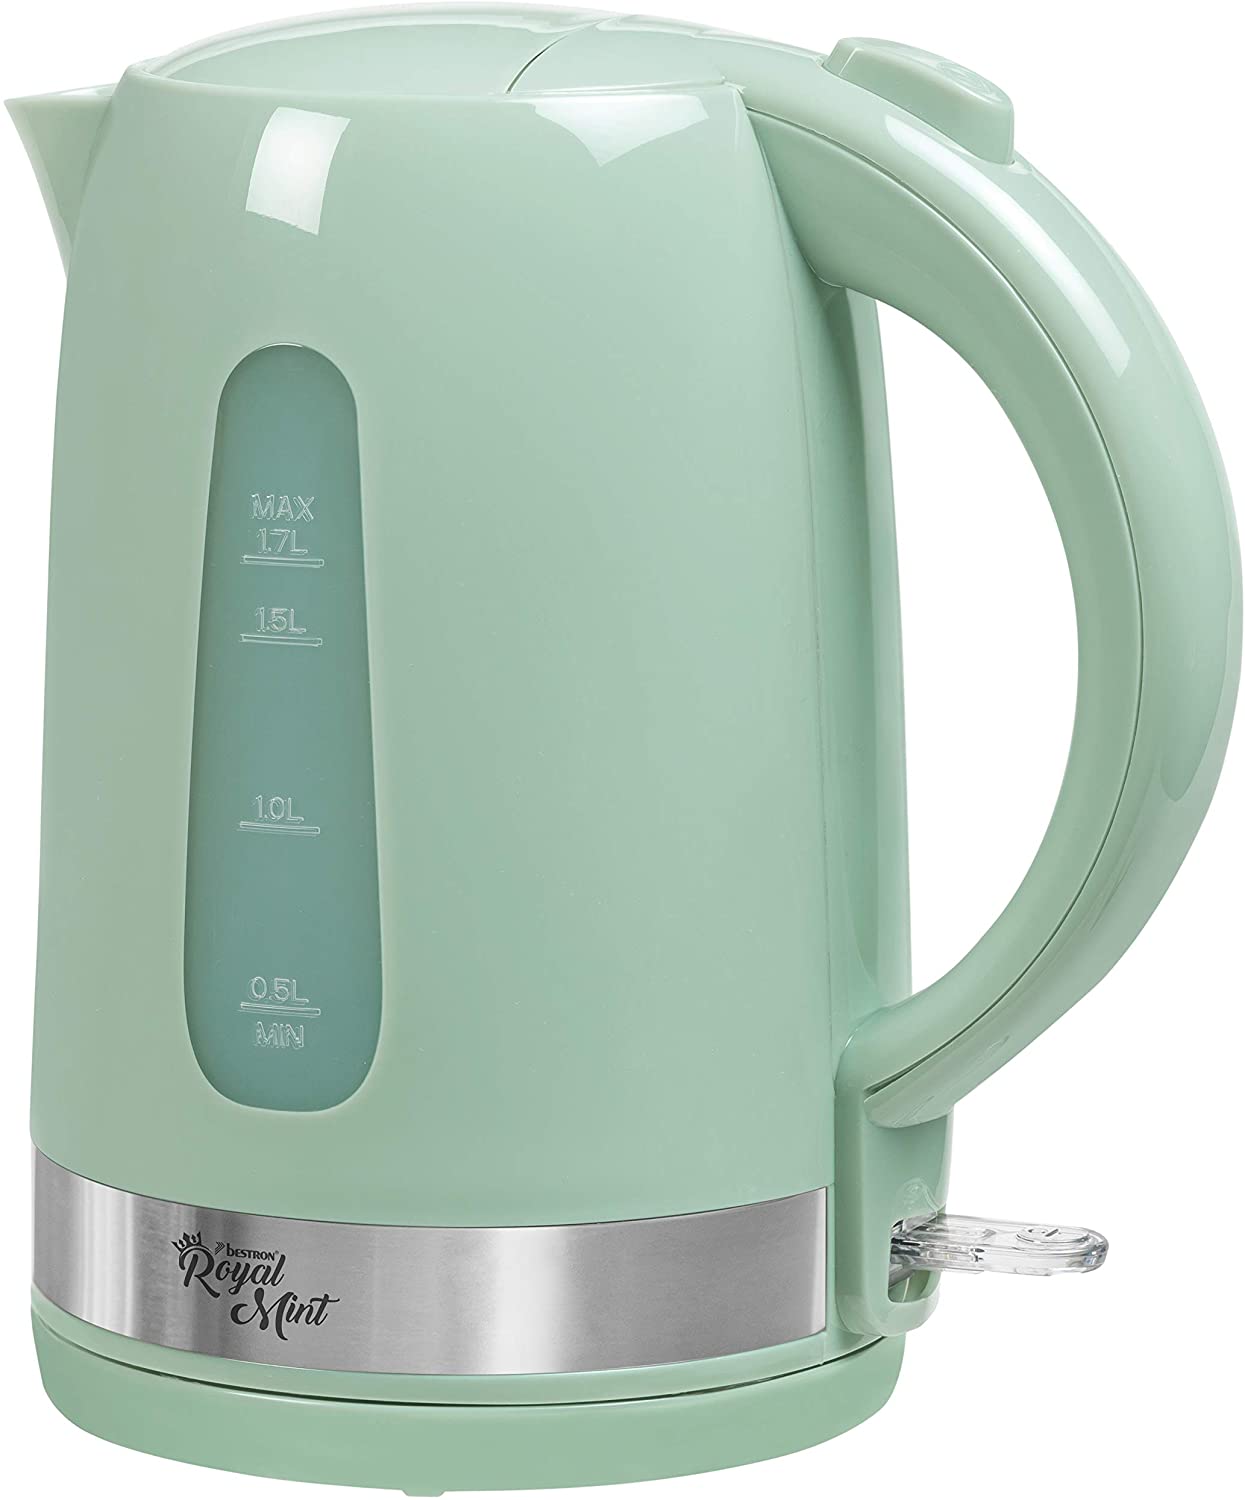 http://honestforwarder.com/uploads/product/bestron-designer-kettle-with-automatic-boil-stop-royal-mint-1-7-litre-2200-watt-mint-green-PqzS8KYvUv0.jpg